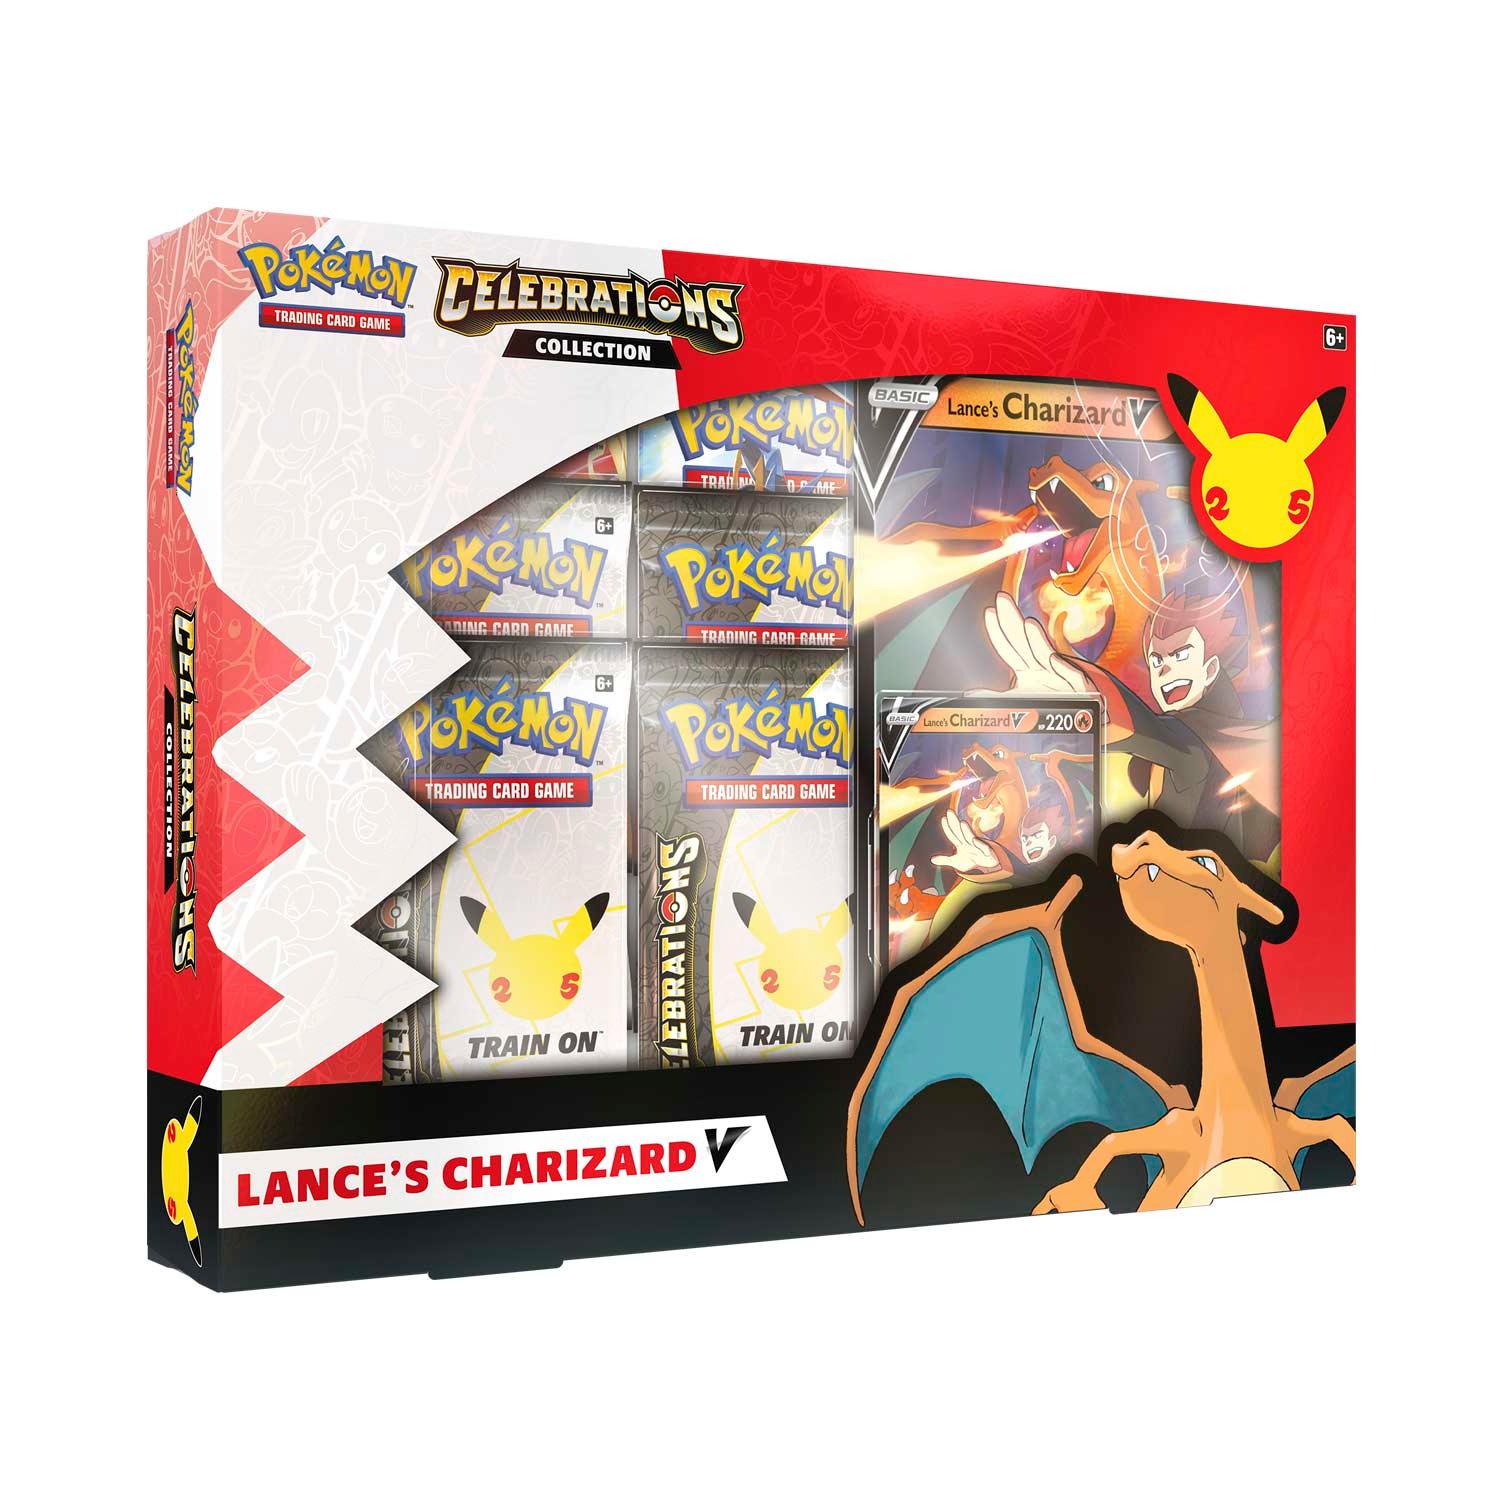 Pokemon Box - Celebrations Collection - Lance's Charizard V - Hobby Champion Inc